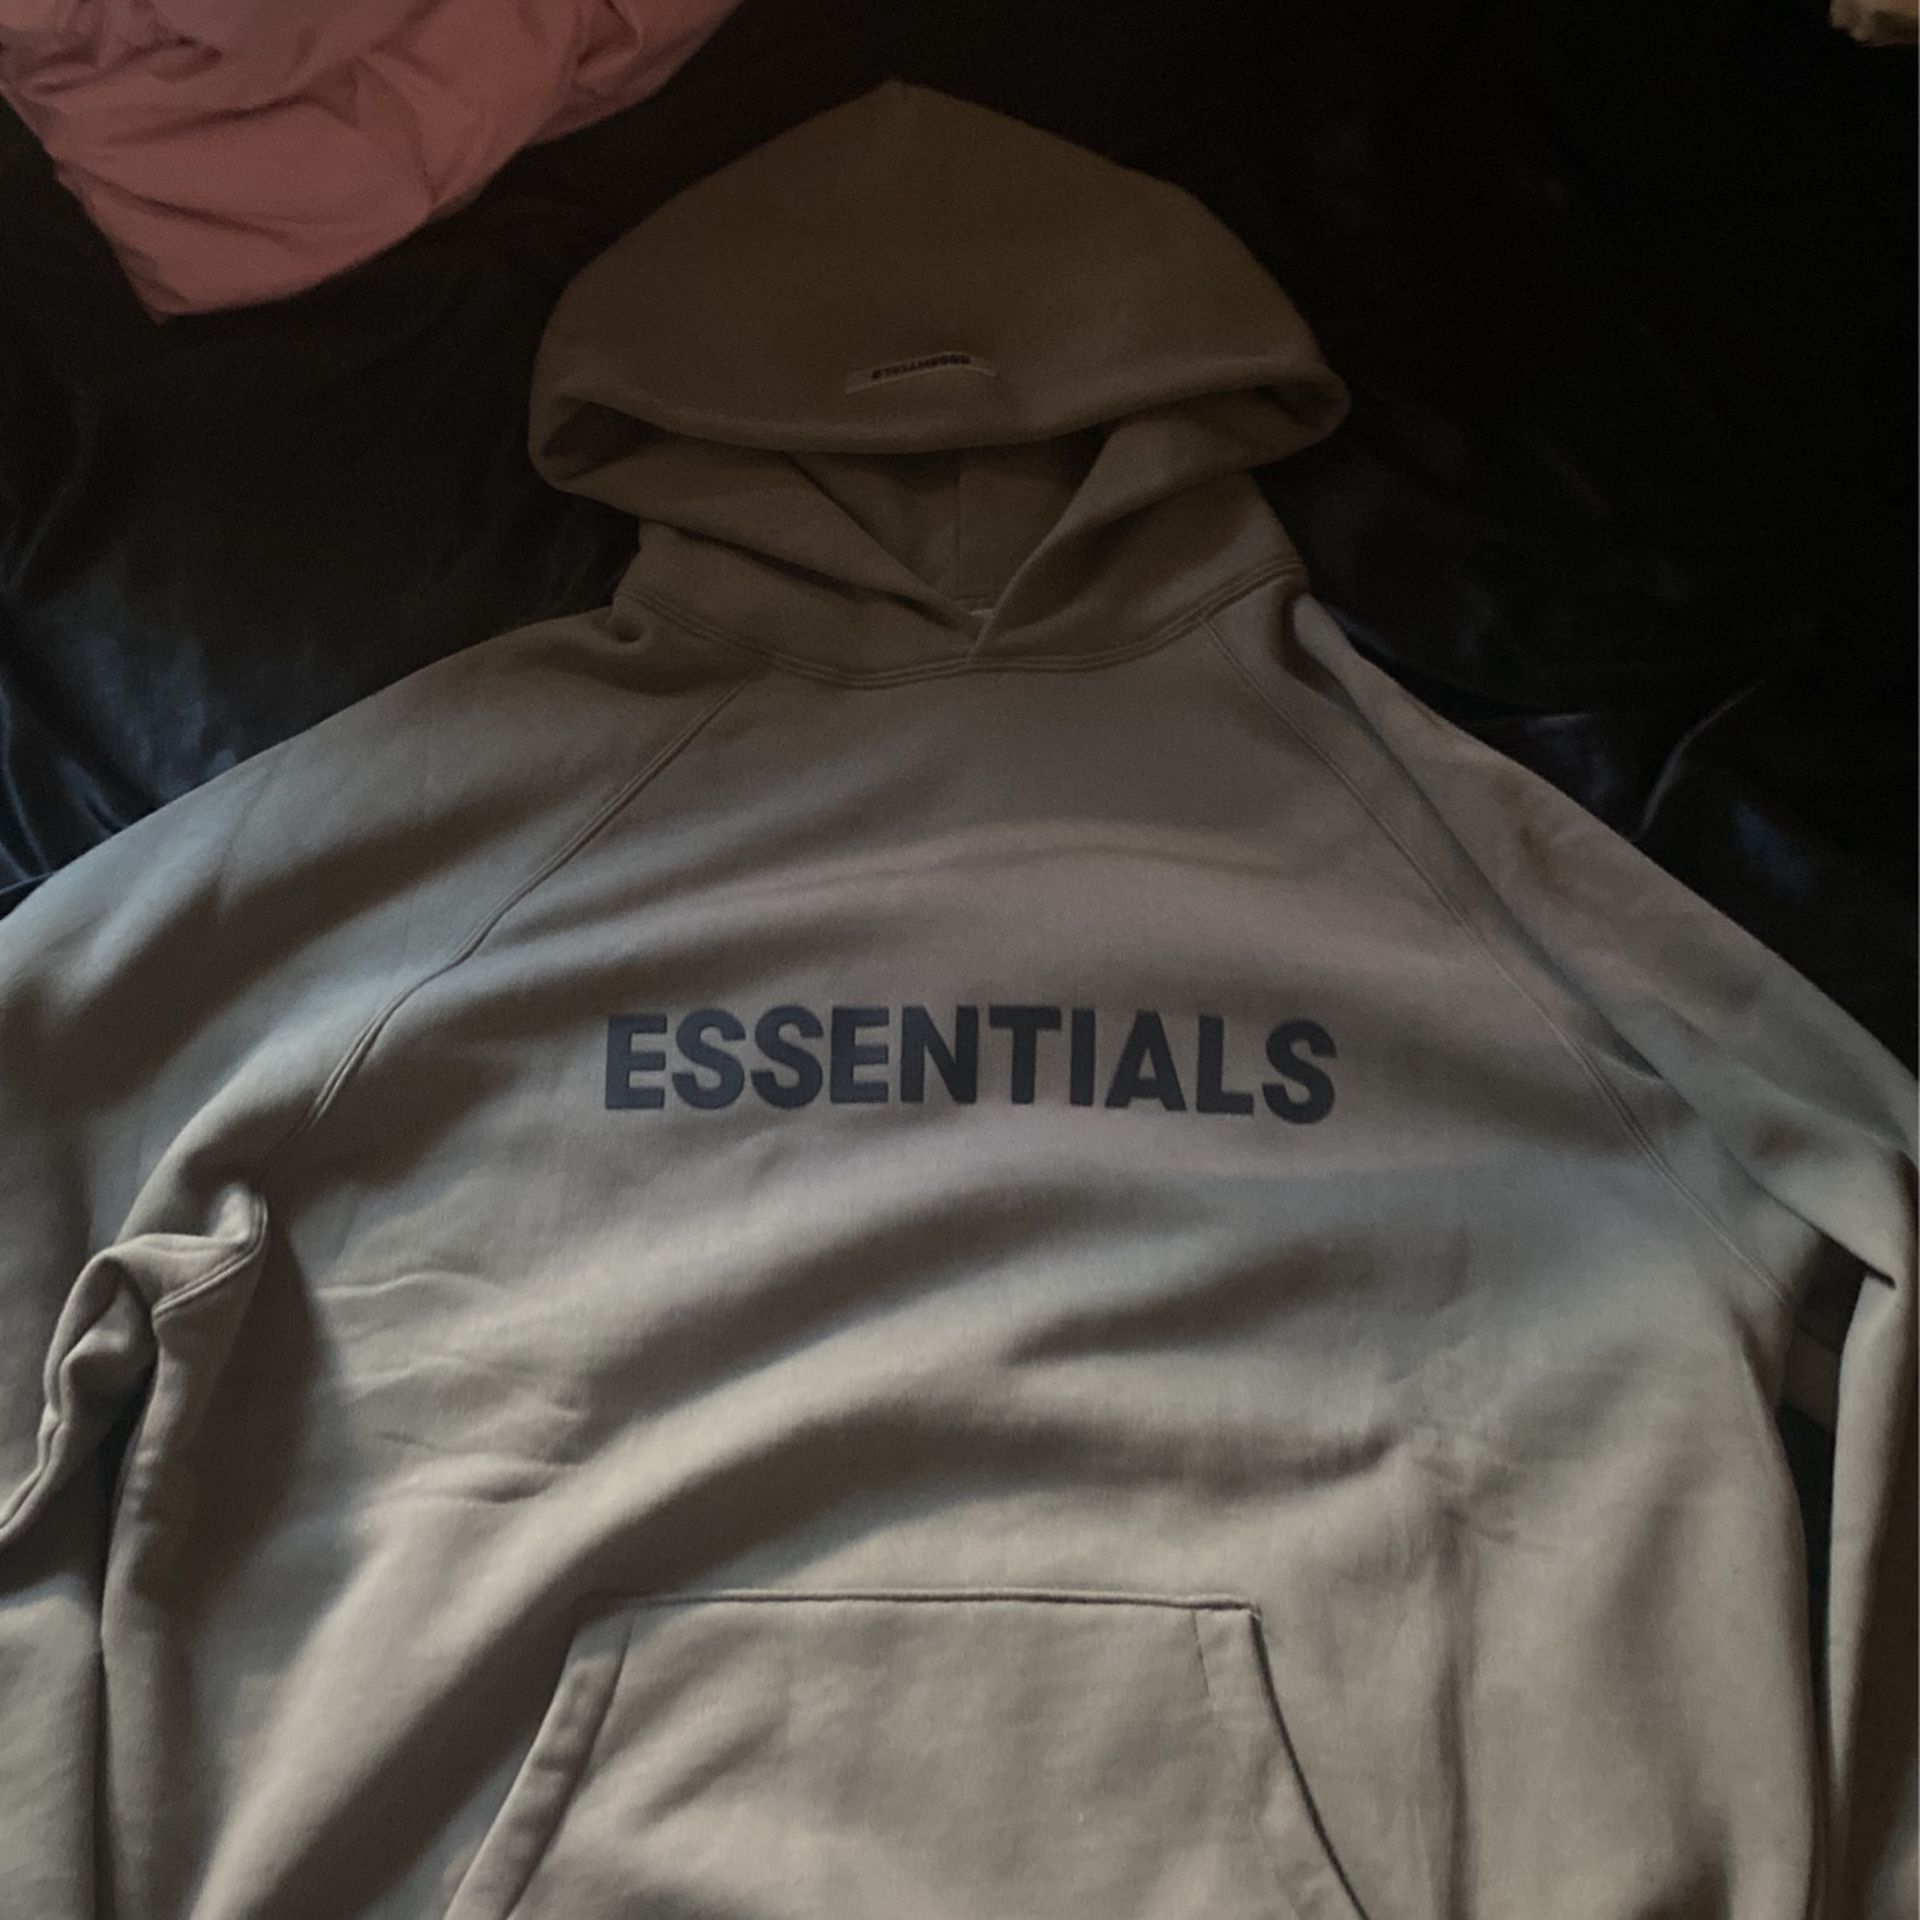 essentials hoodie size large 